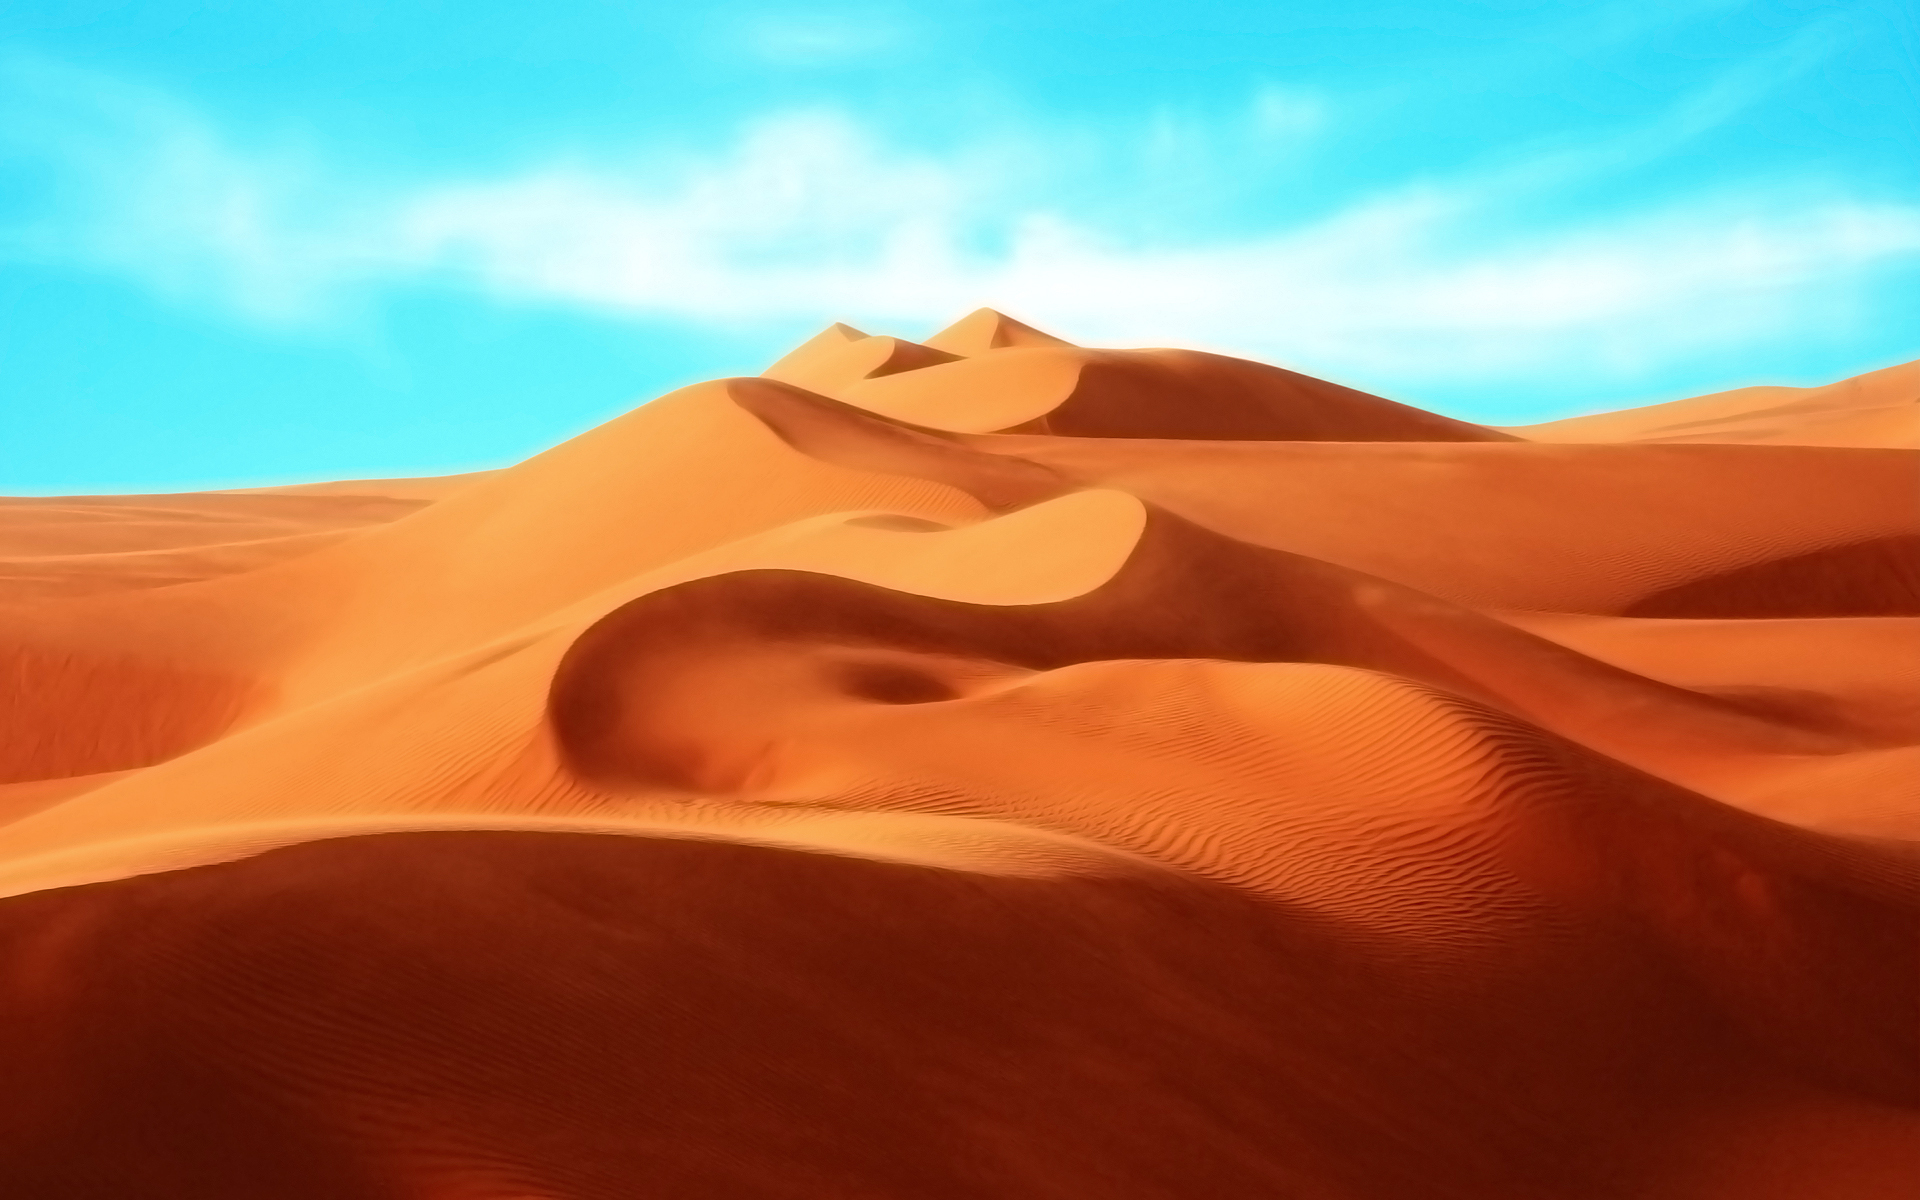 Lights flooding the desert sands from the sky 6K wallpaper download